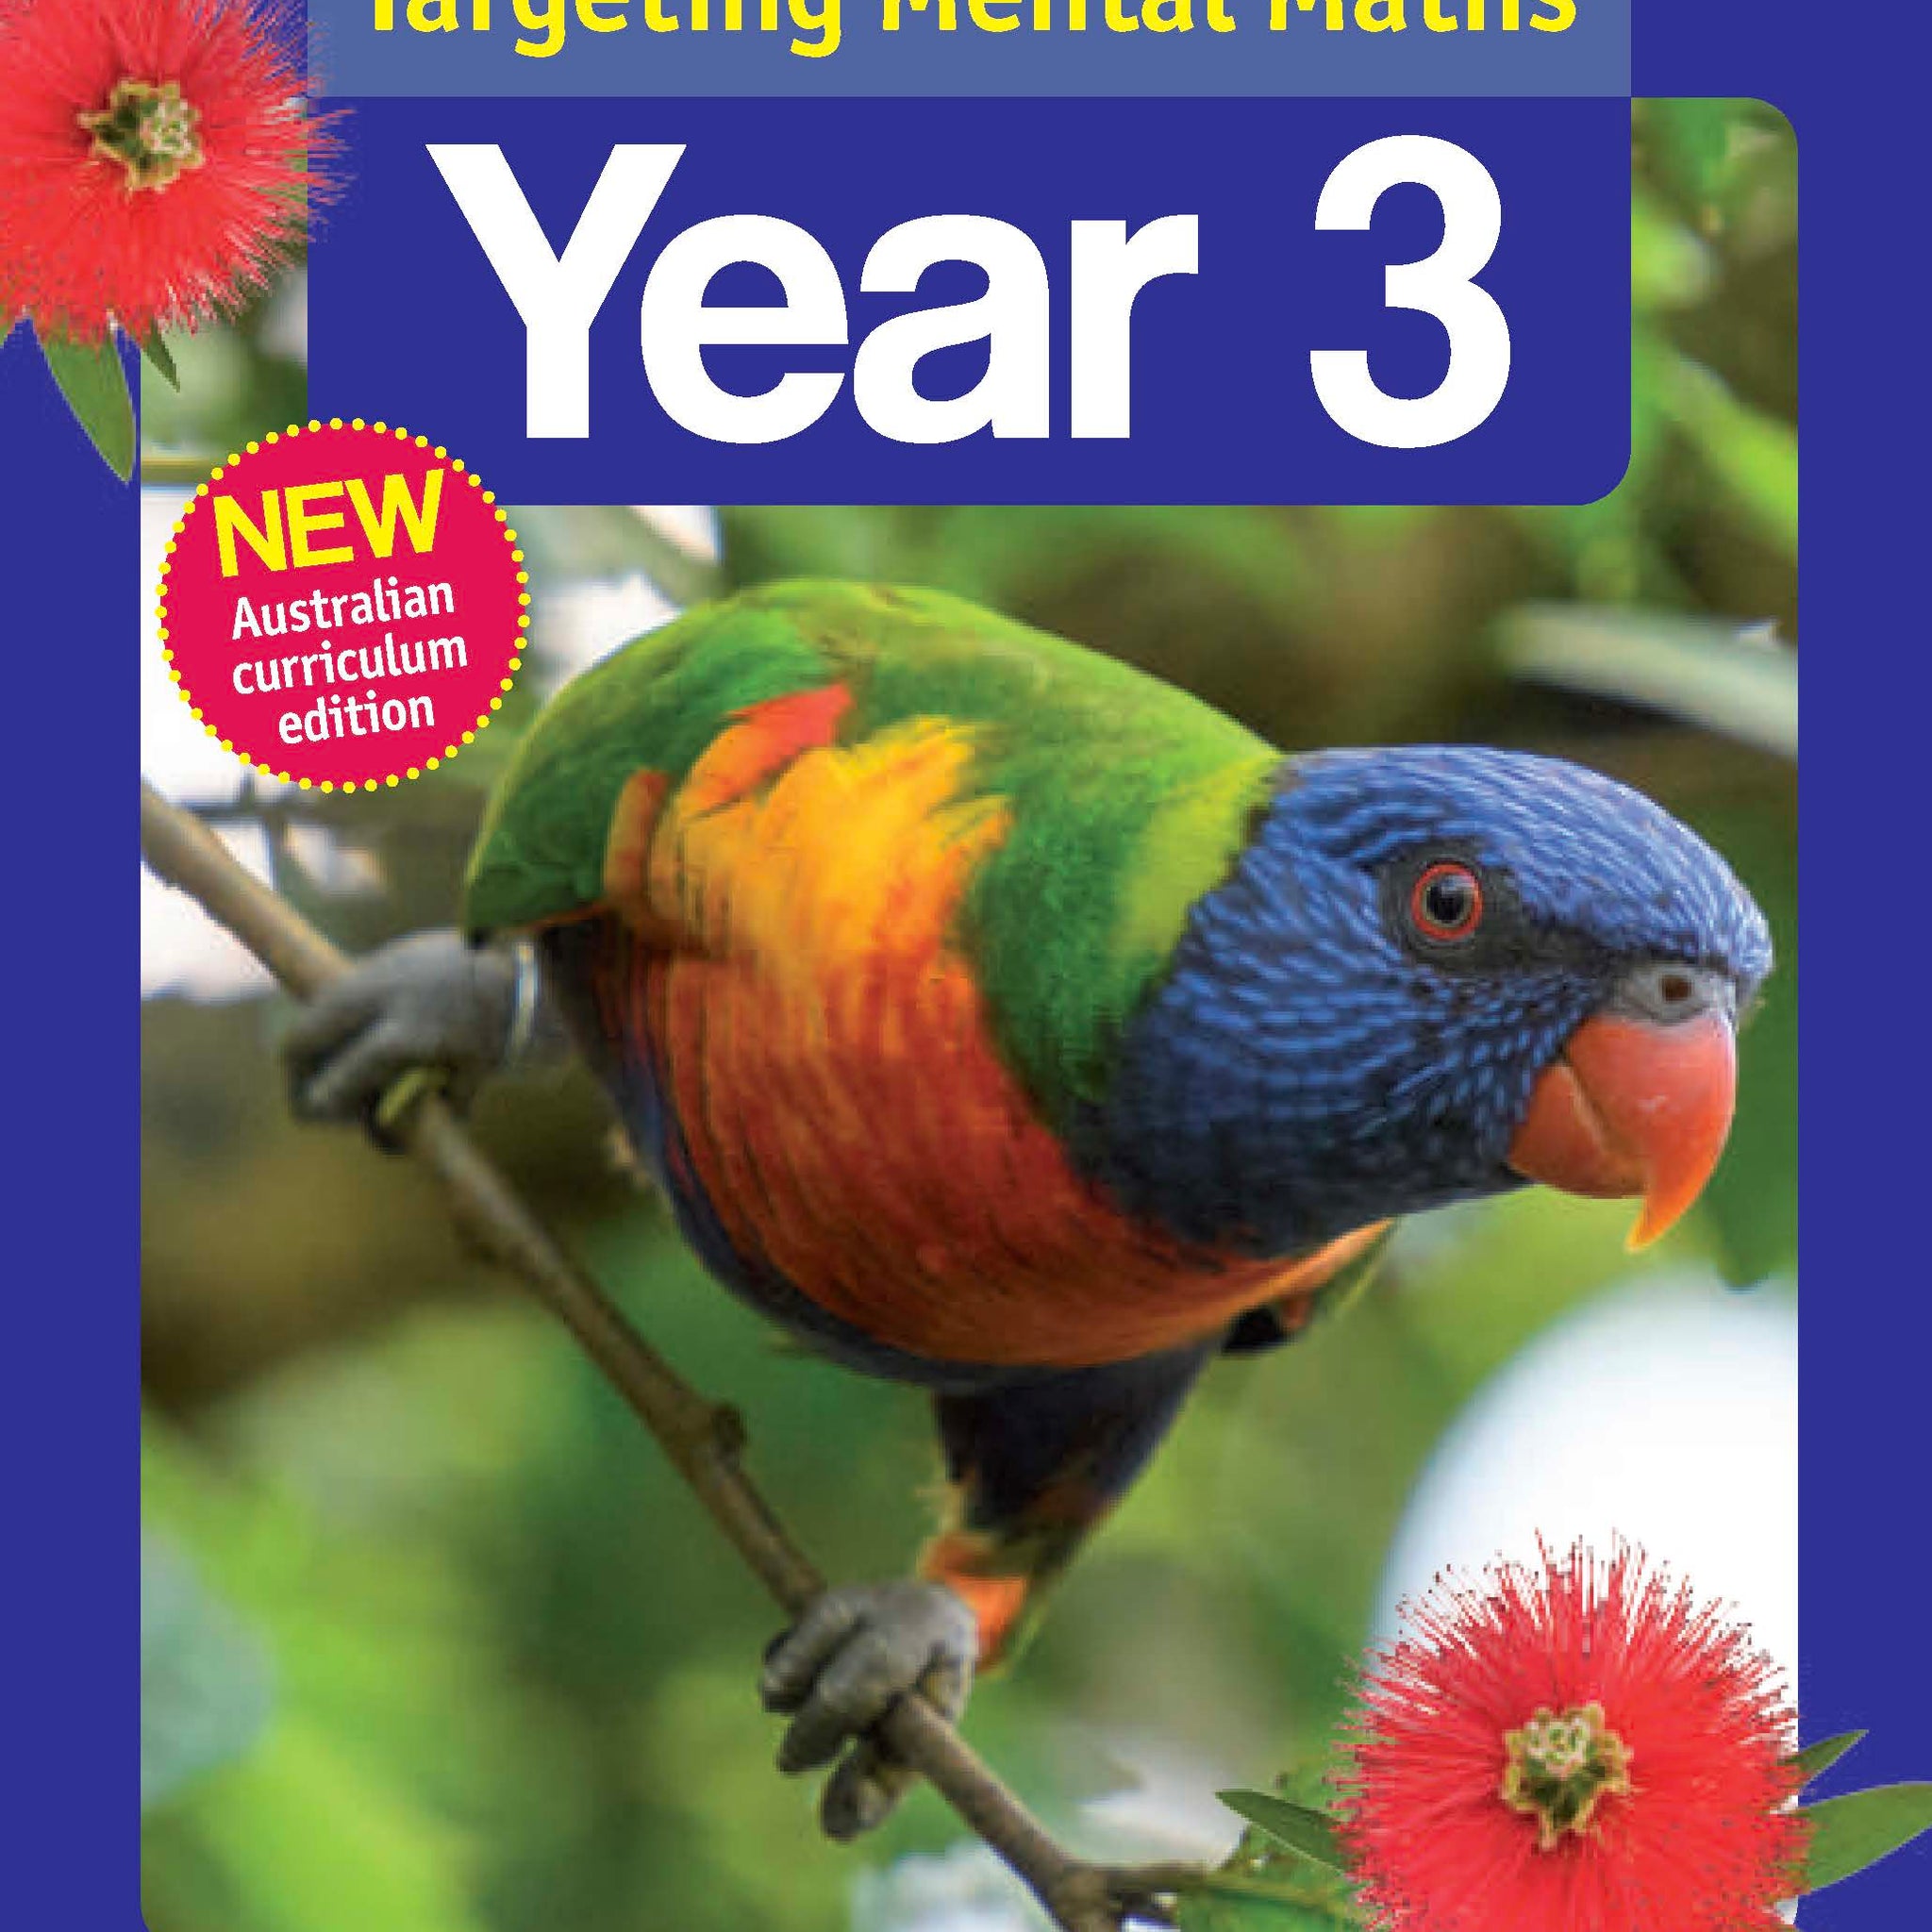 Targeting Mental Maths Australian Curriculum Year 3 - New       Edition 2022